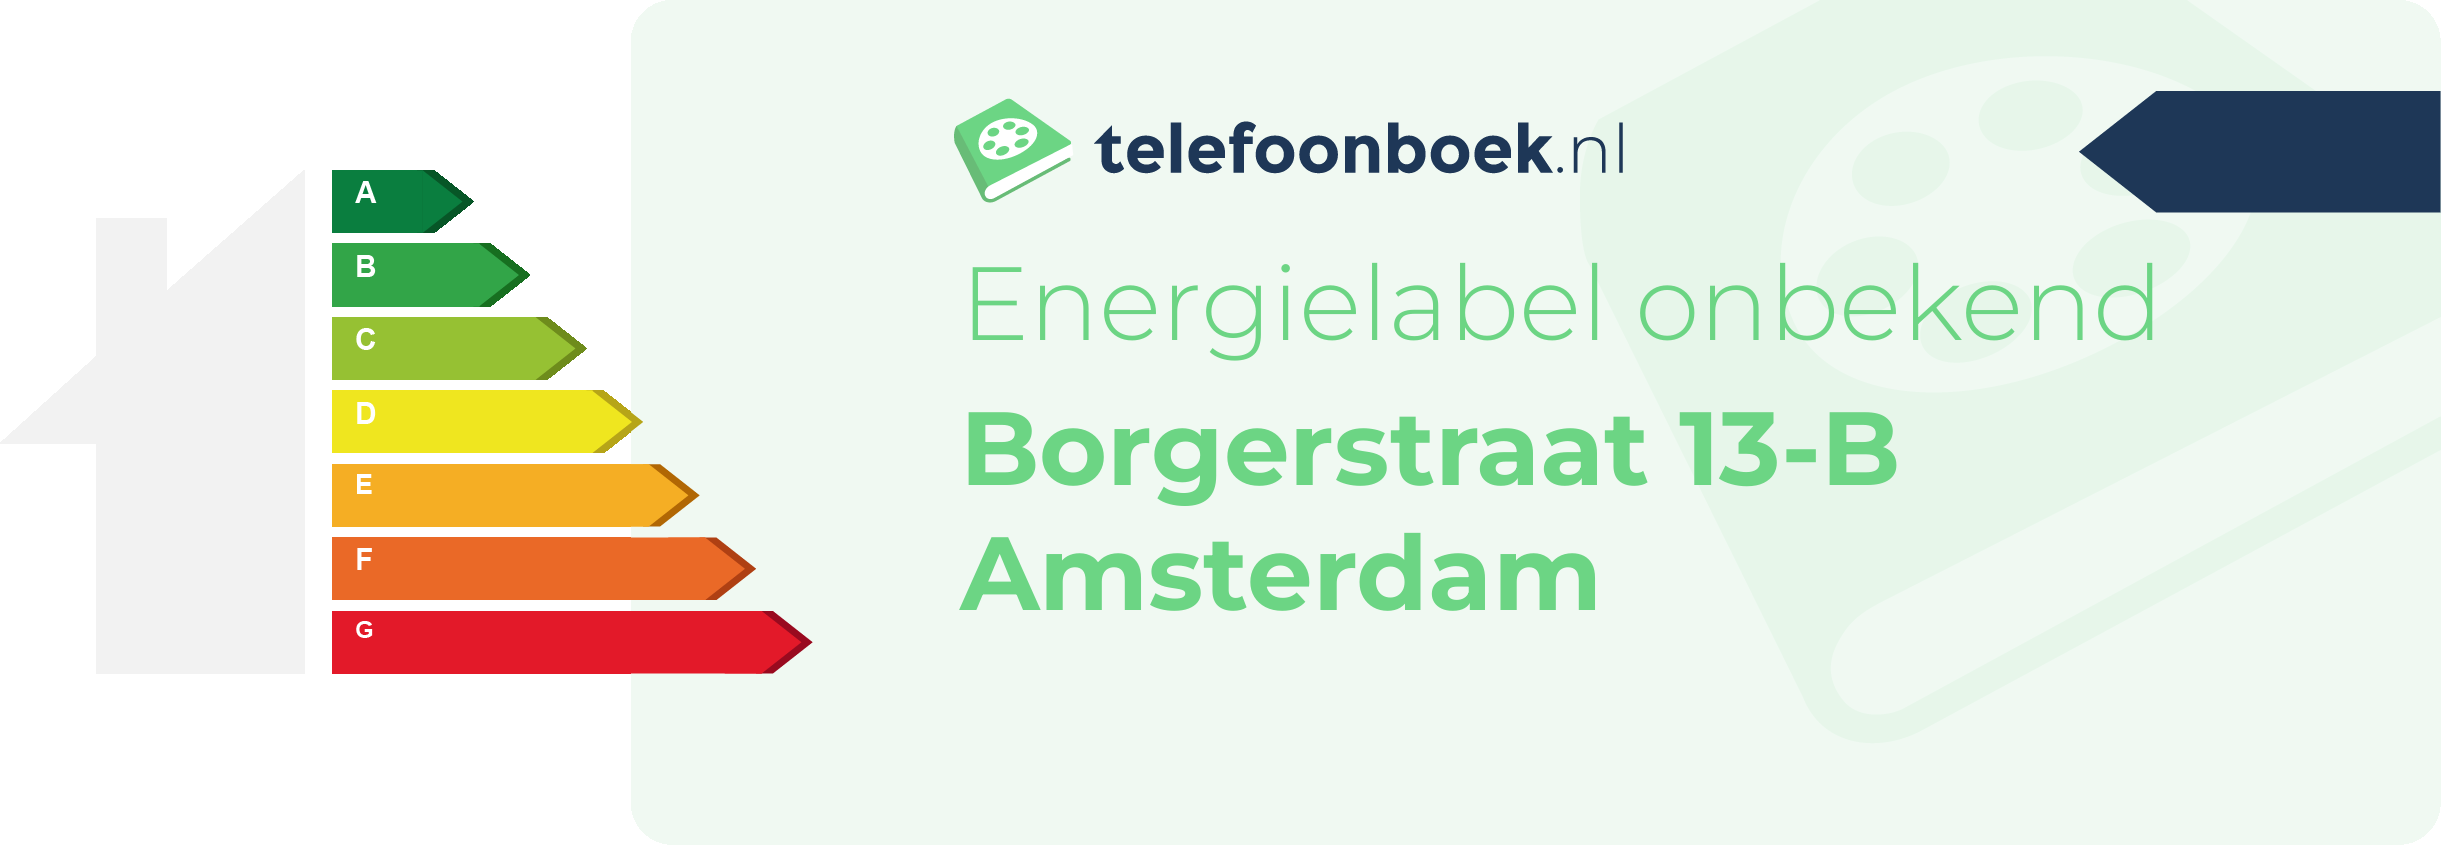 Energielabel Borgerstraat 13-B Amsterdam